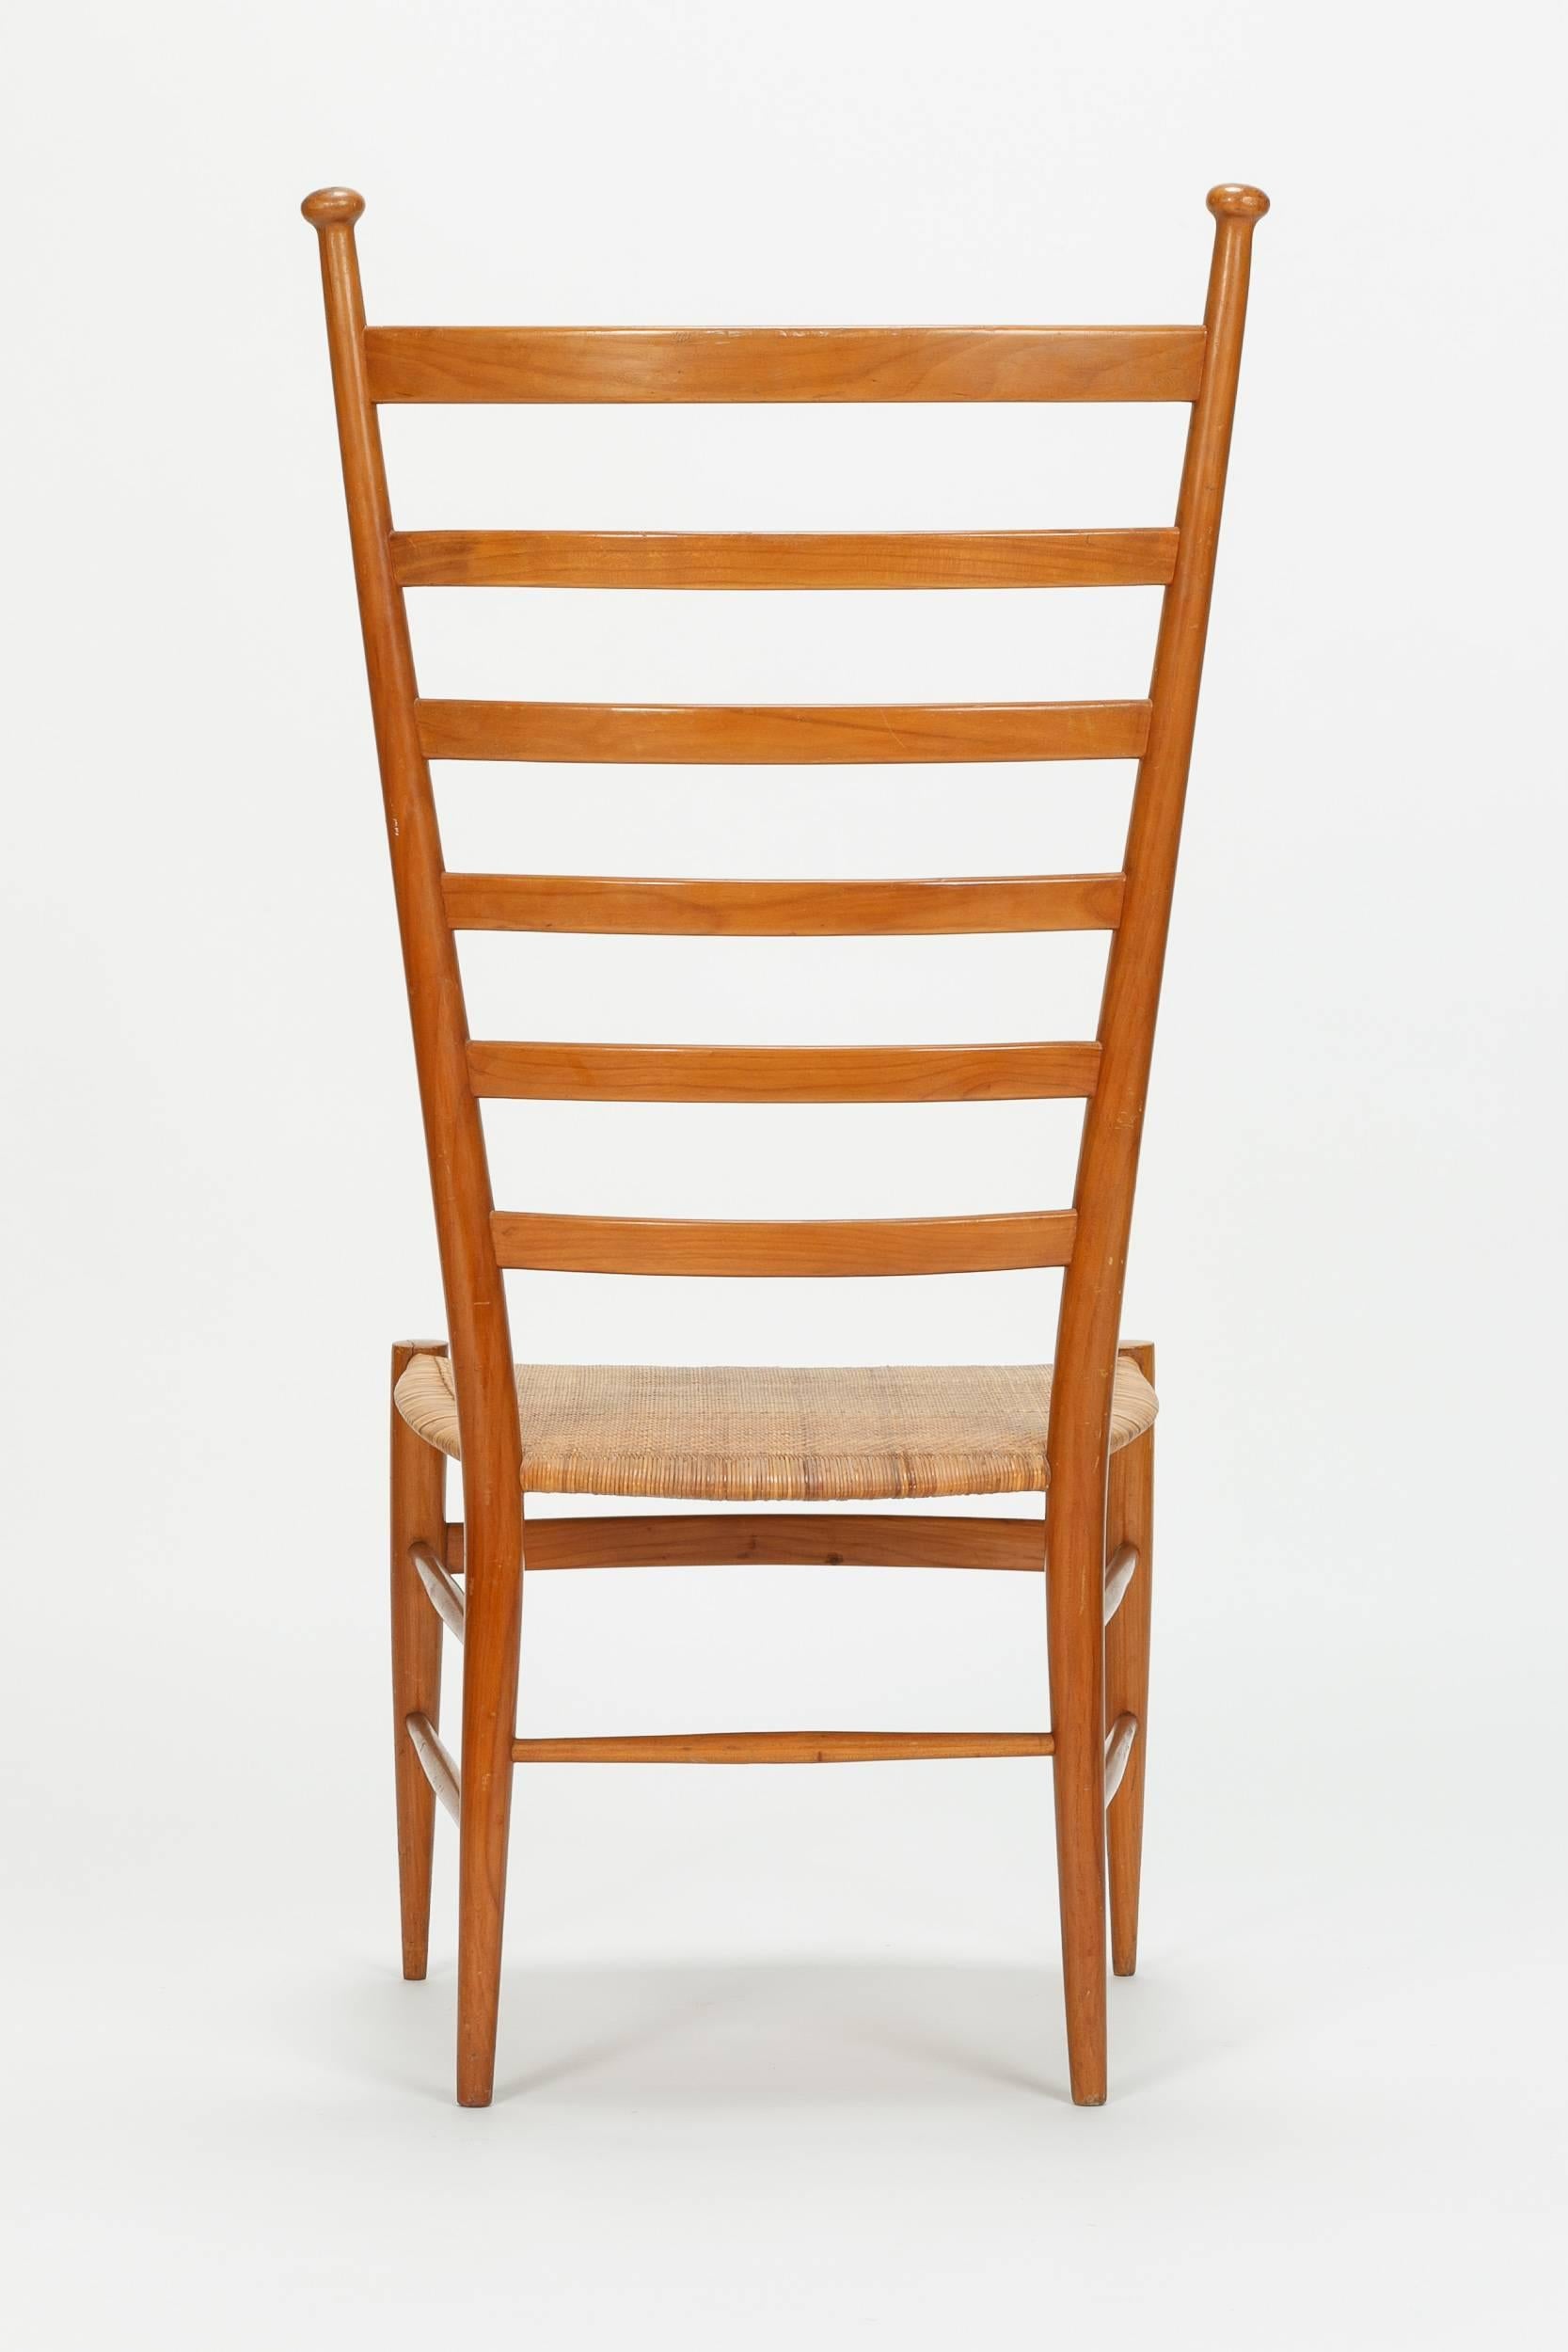 Italian Sanguineti Chair Chiavari, 1950s For Sale